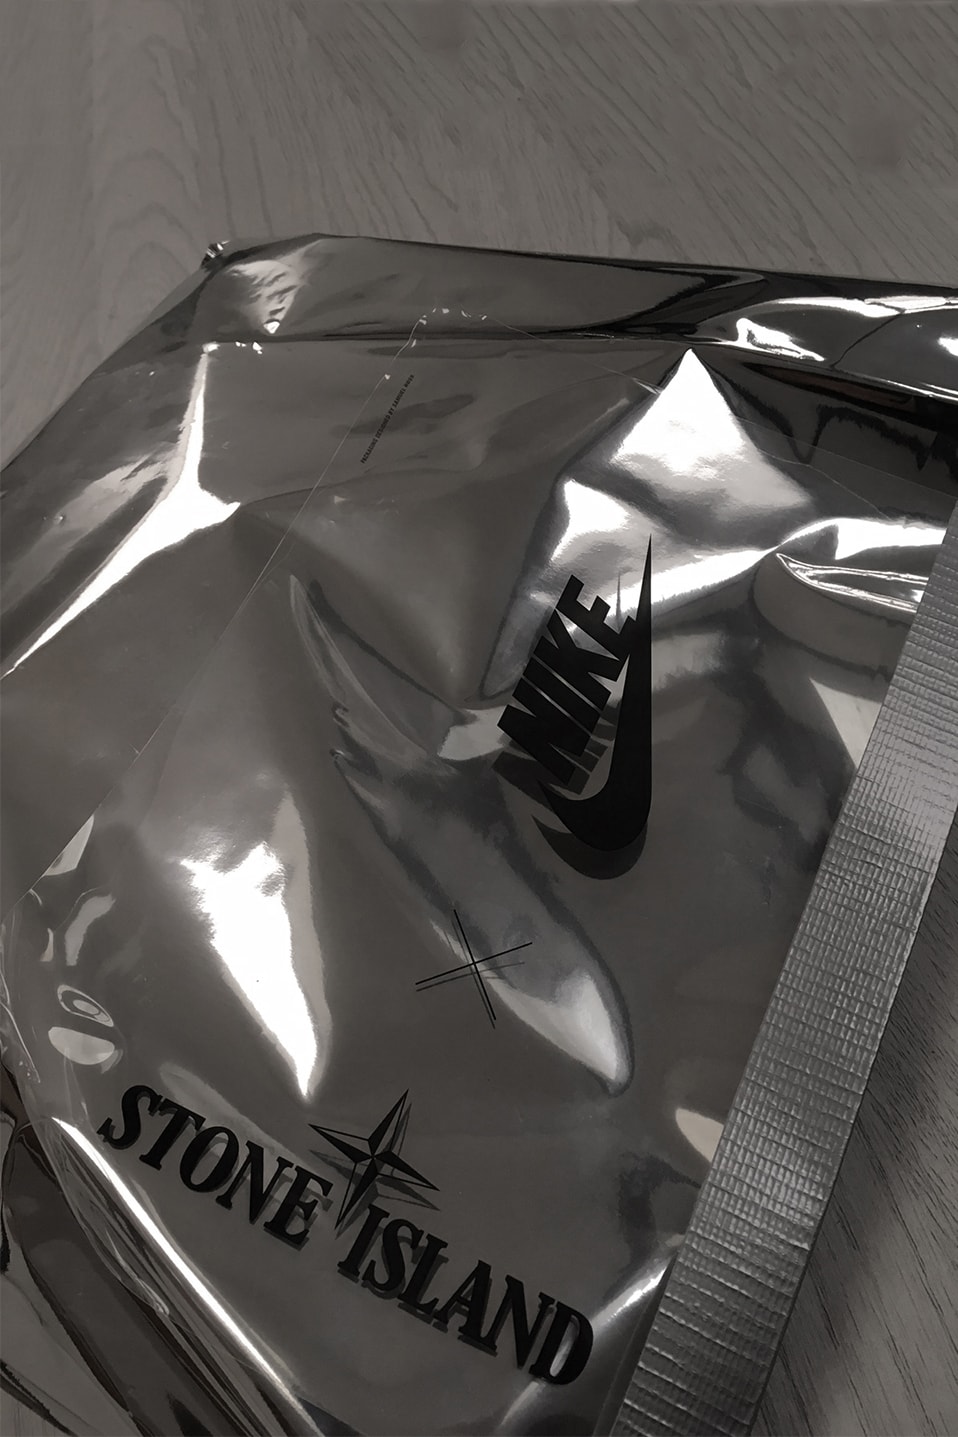 NikeLab x Stone Island Samuel Ross Packaging